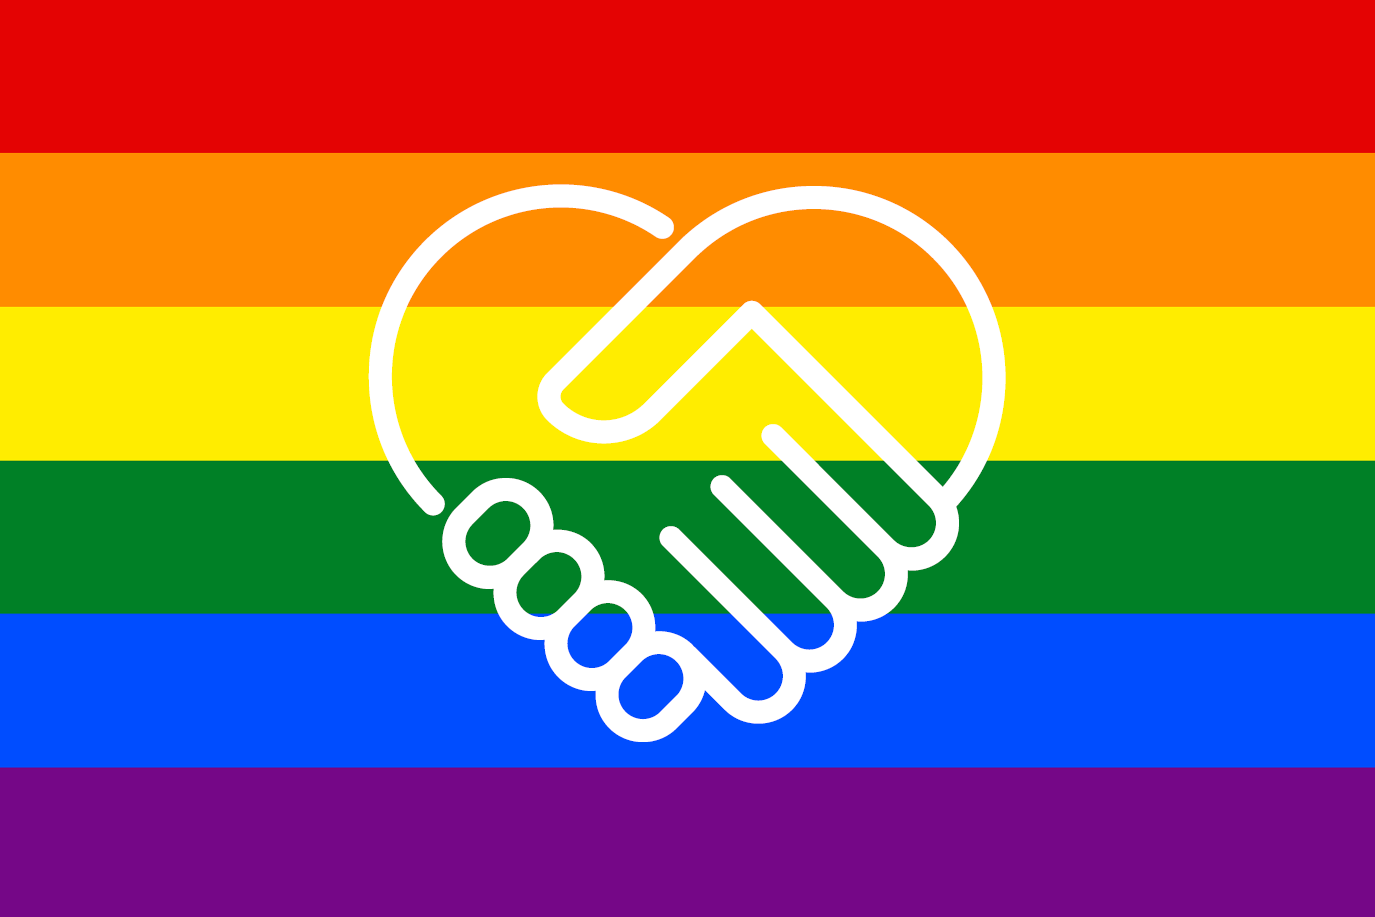 Equality Logo - CARE Australia supports marriage equality Australia